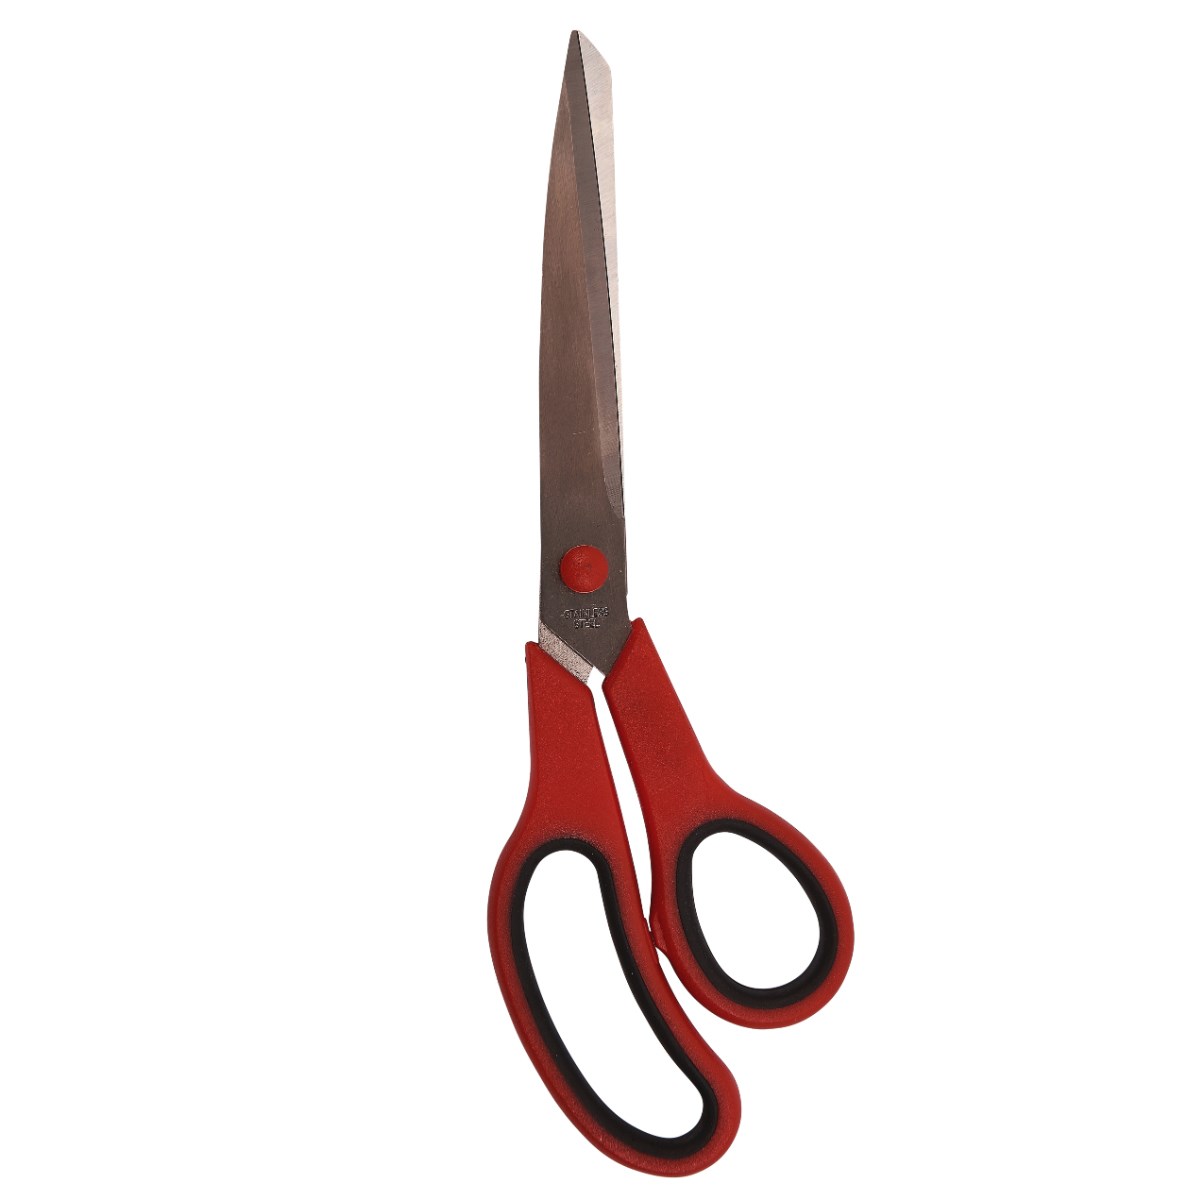 10" (250mm) pro wallpaper scissors - Amtech